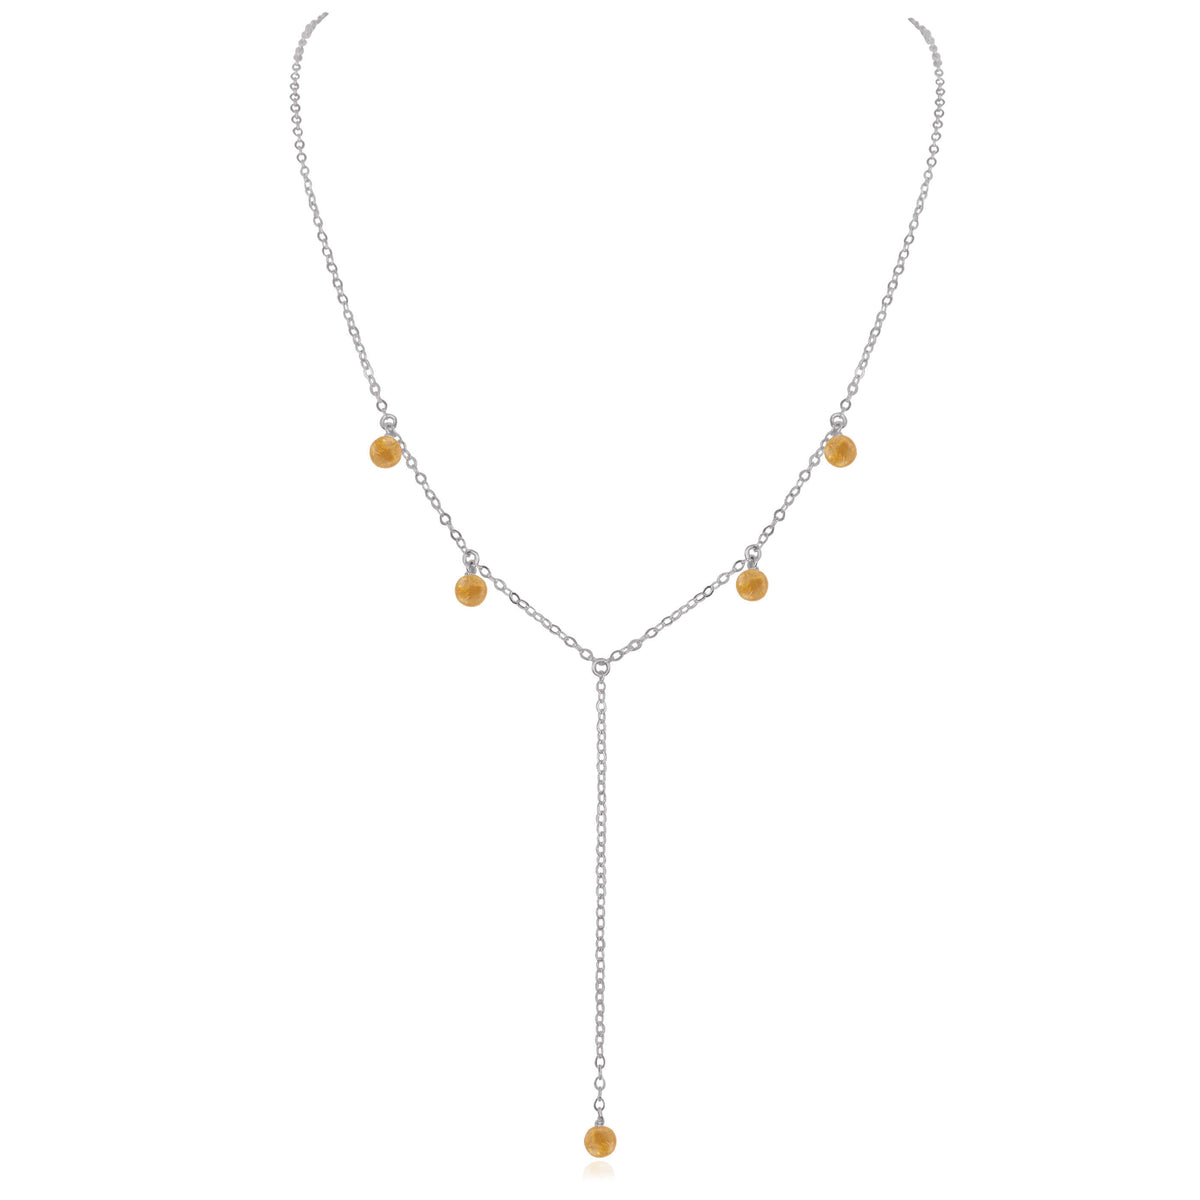 Boho Y Necklace - Citrine - Stainless Steel - Luna Tide Handmade Jewellery